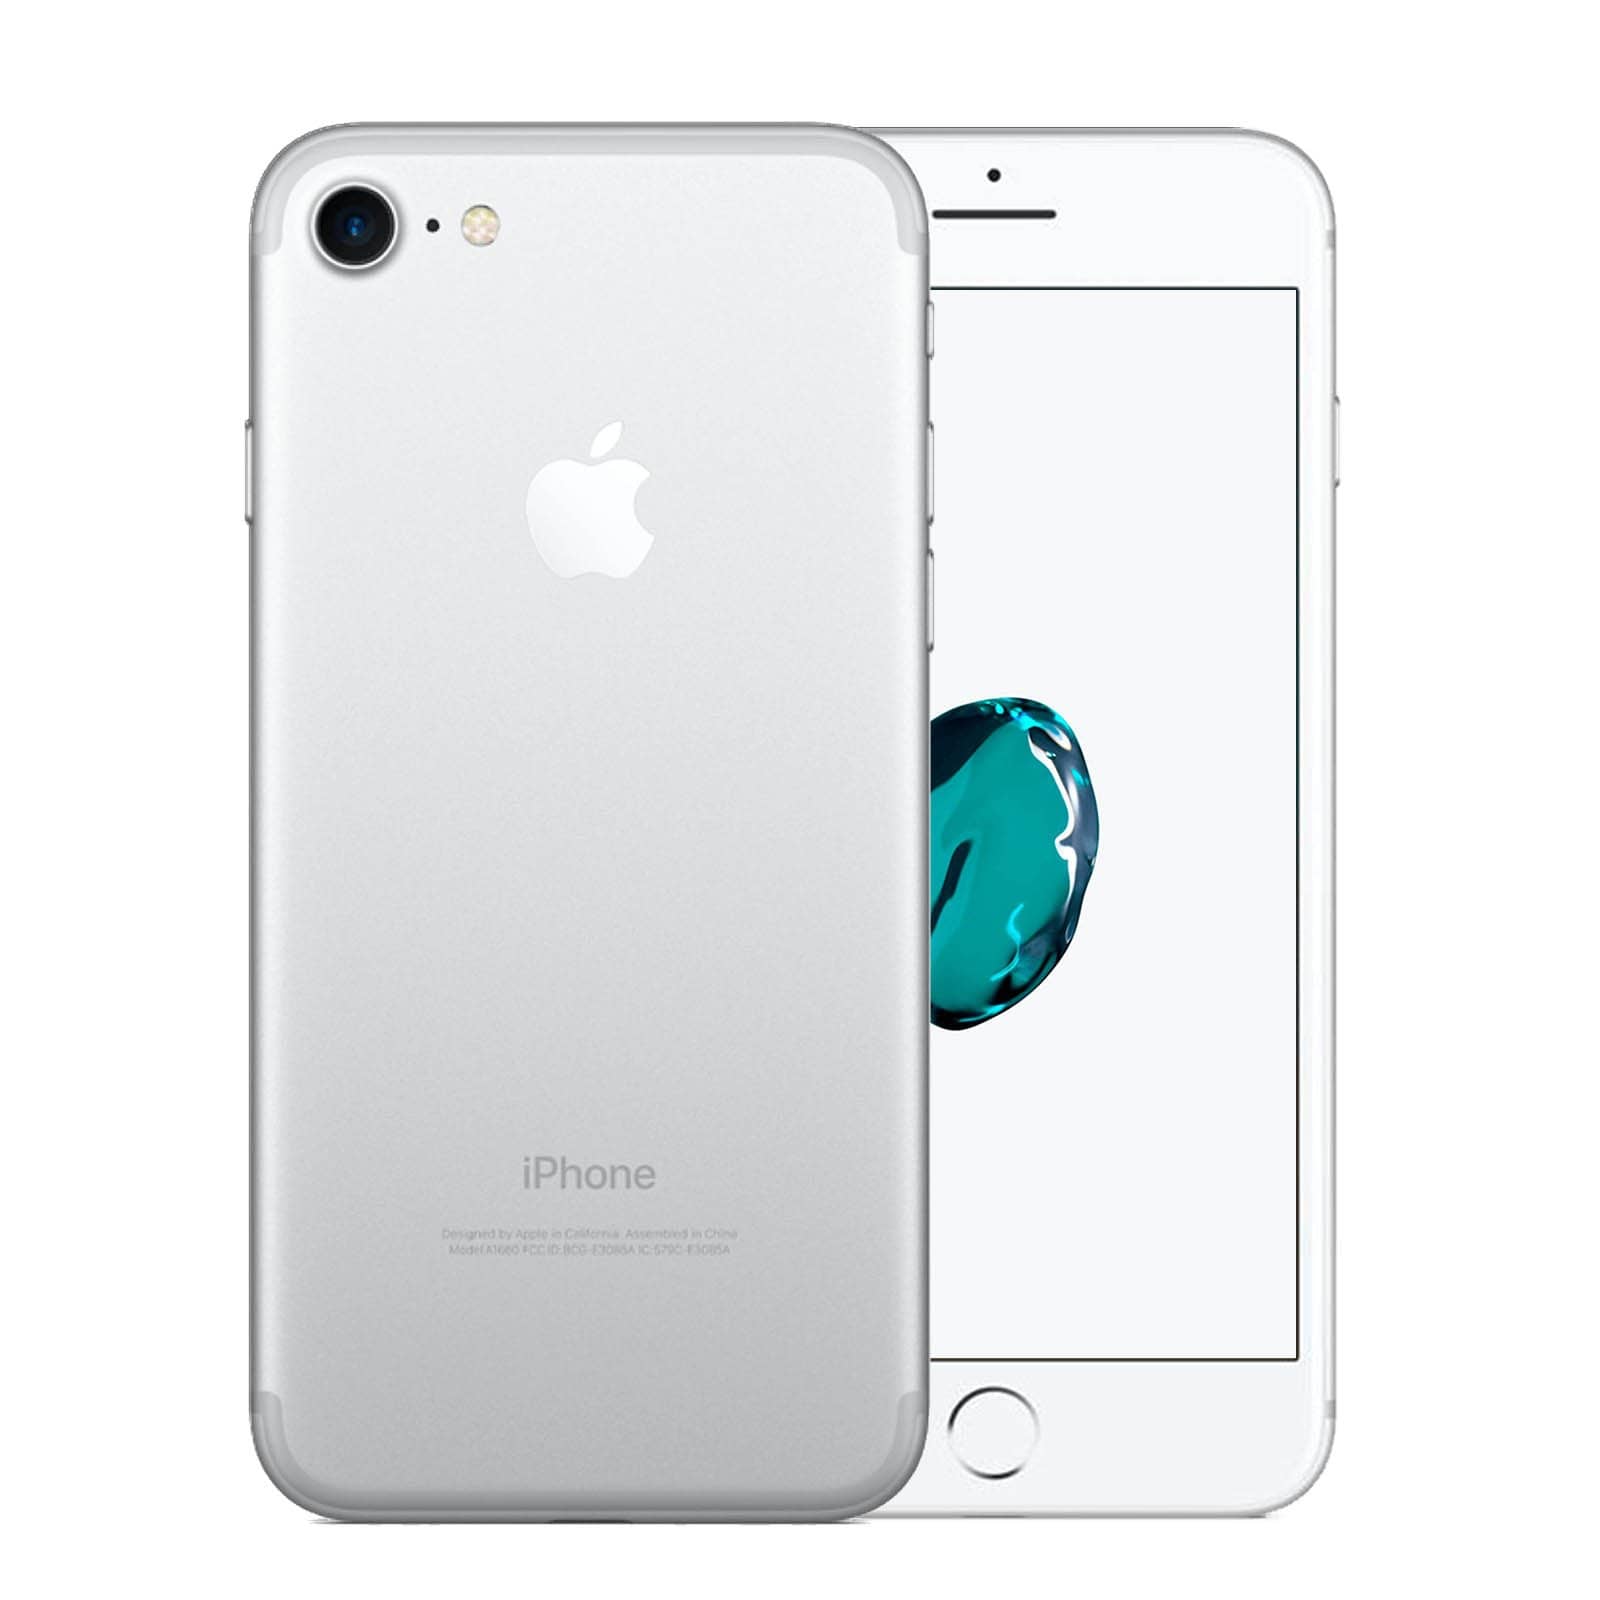 Apple iPhone 7 128GB Silver Good - Unlocked